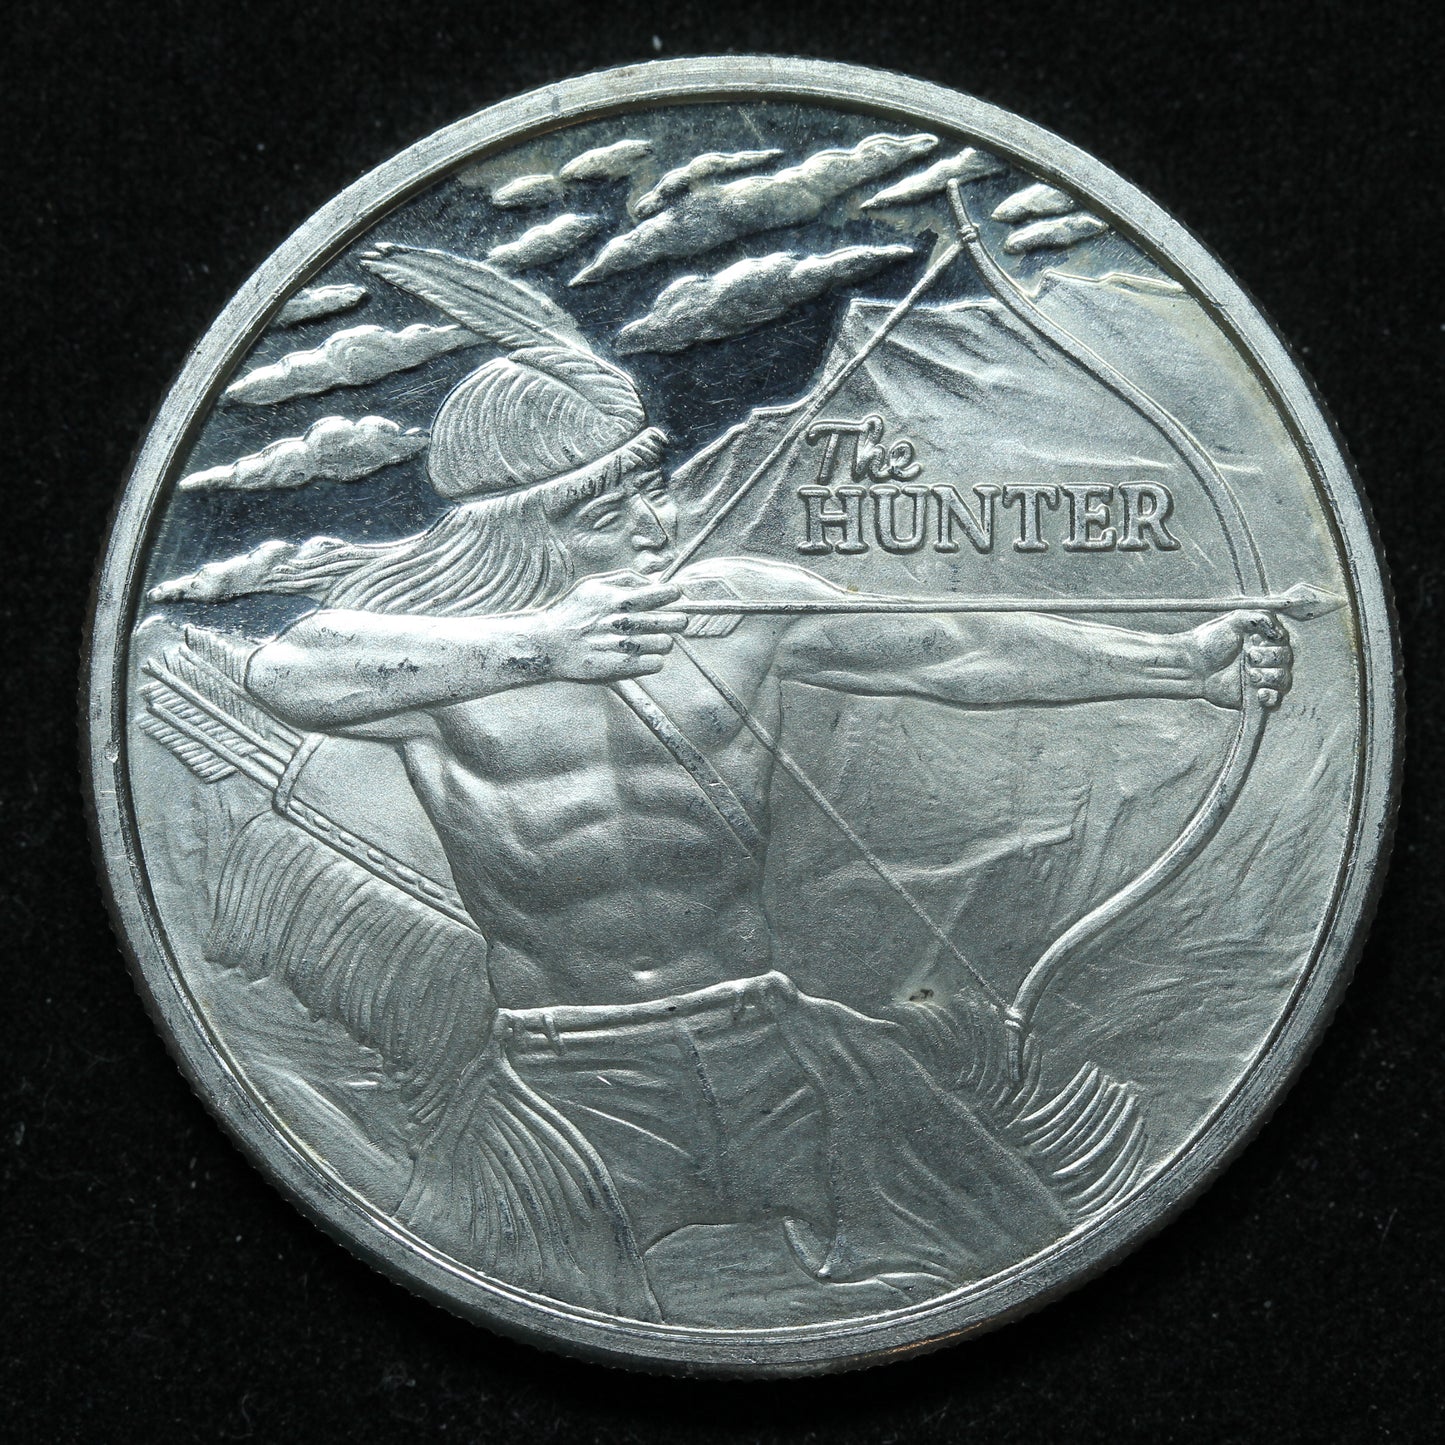 1 oz .999 Fine Silver Round - 2016 "The Hunter" Indian & Buffalo Art Round